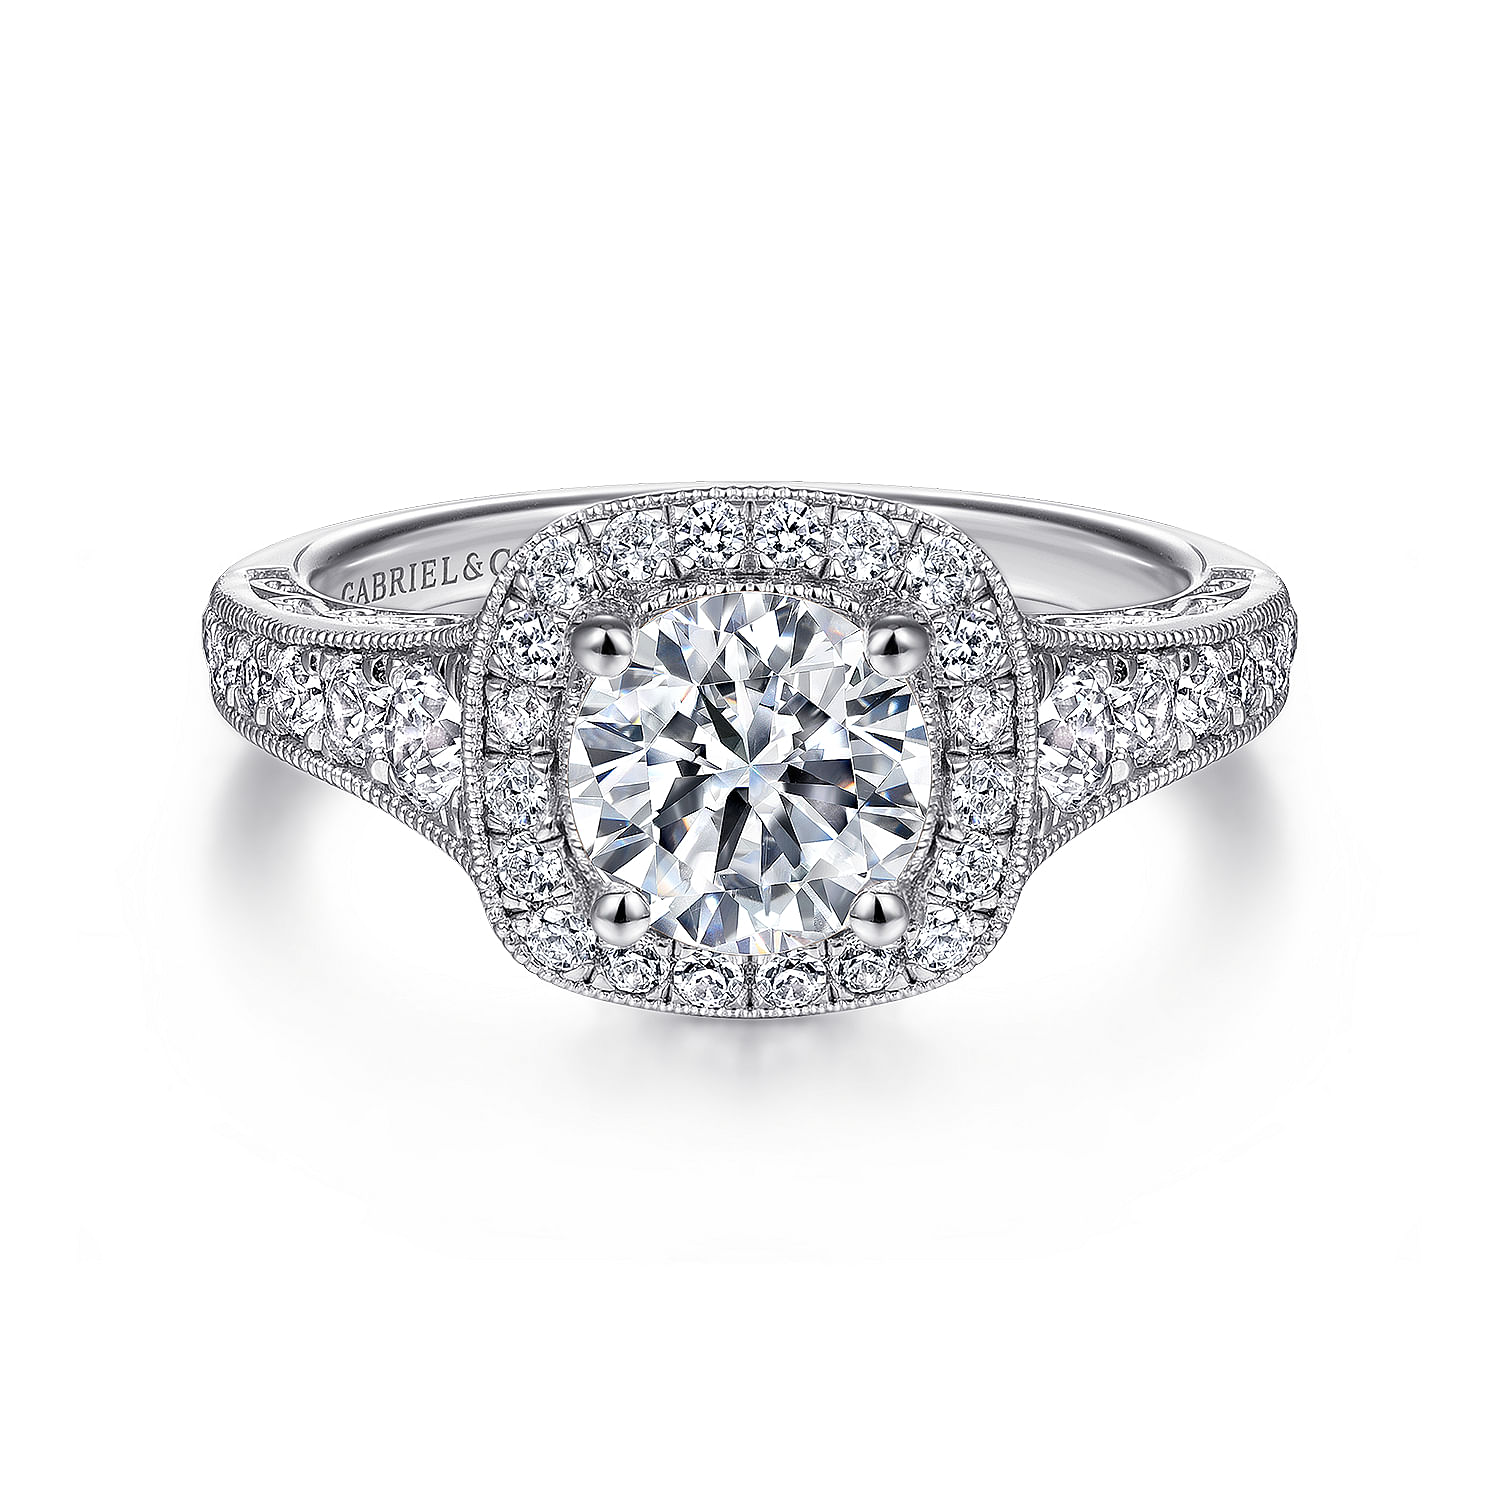 Florence---Vintage-Inspired-14K-White-Gold-Cushion-Halo-Round-Diamond-Engagement-Ring1